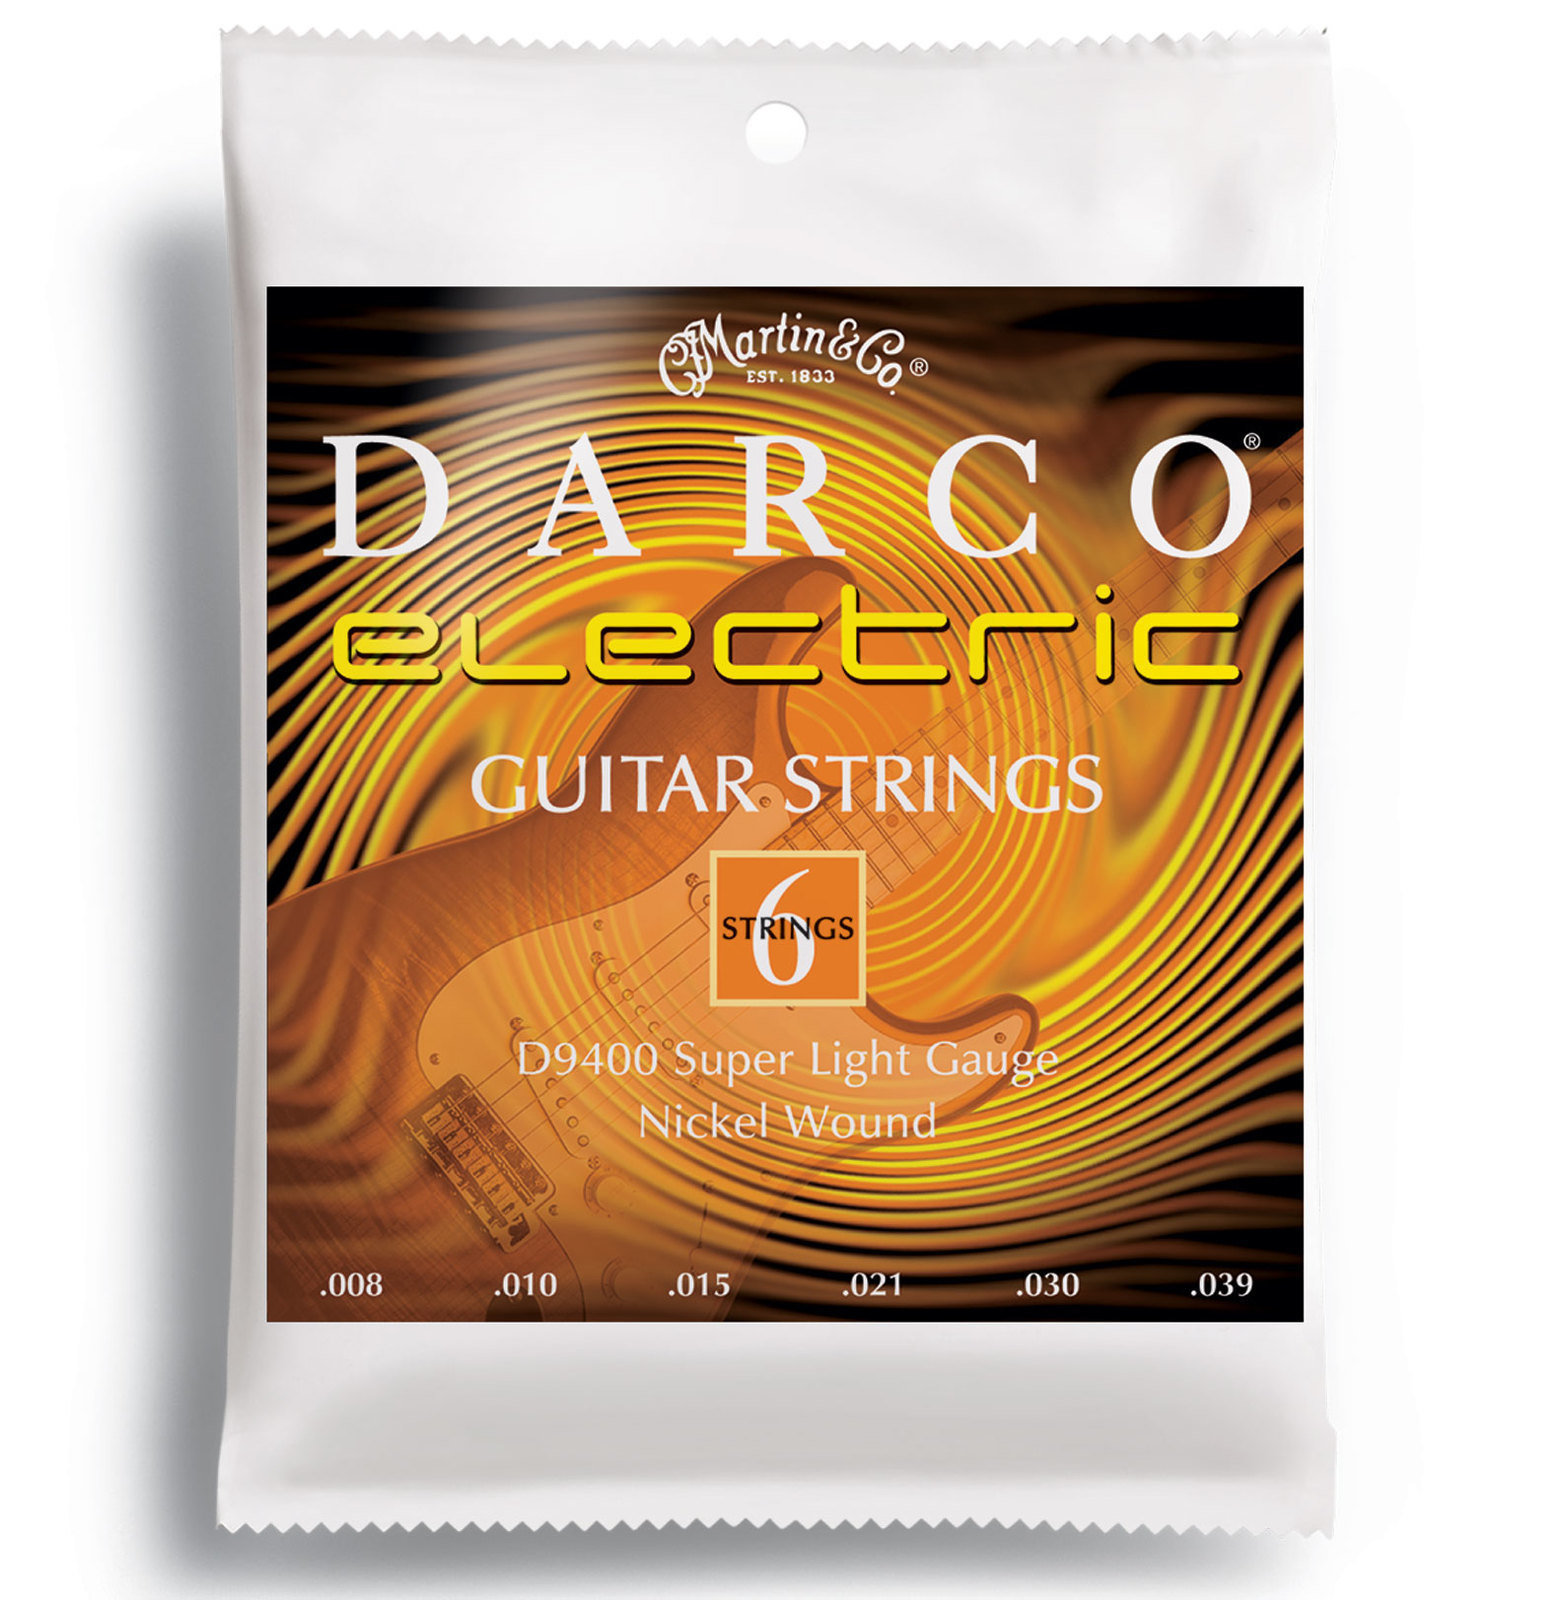 Struny pro elektrickou kytaru Martin D9400 Darco Electric Guitar Strings, Super Light